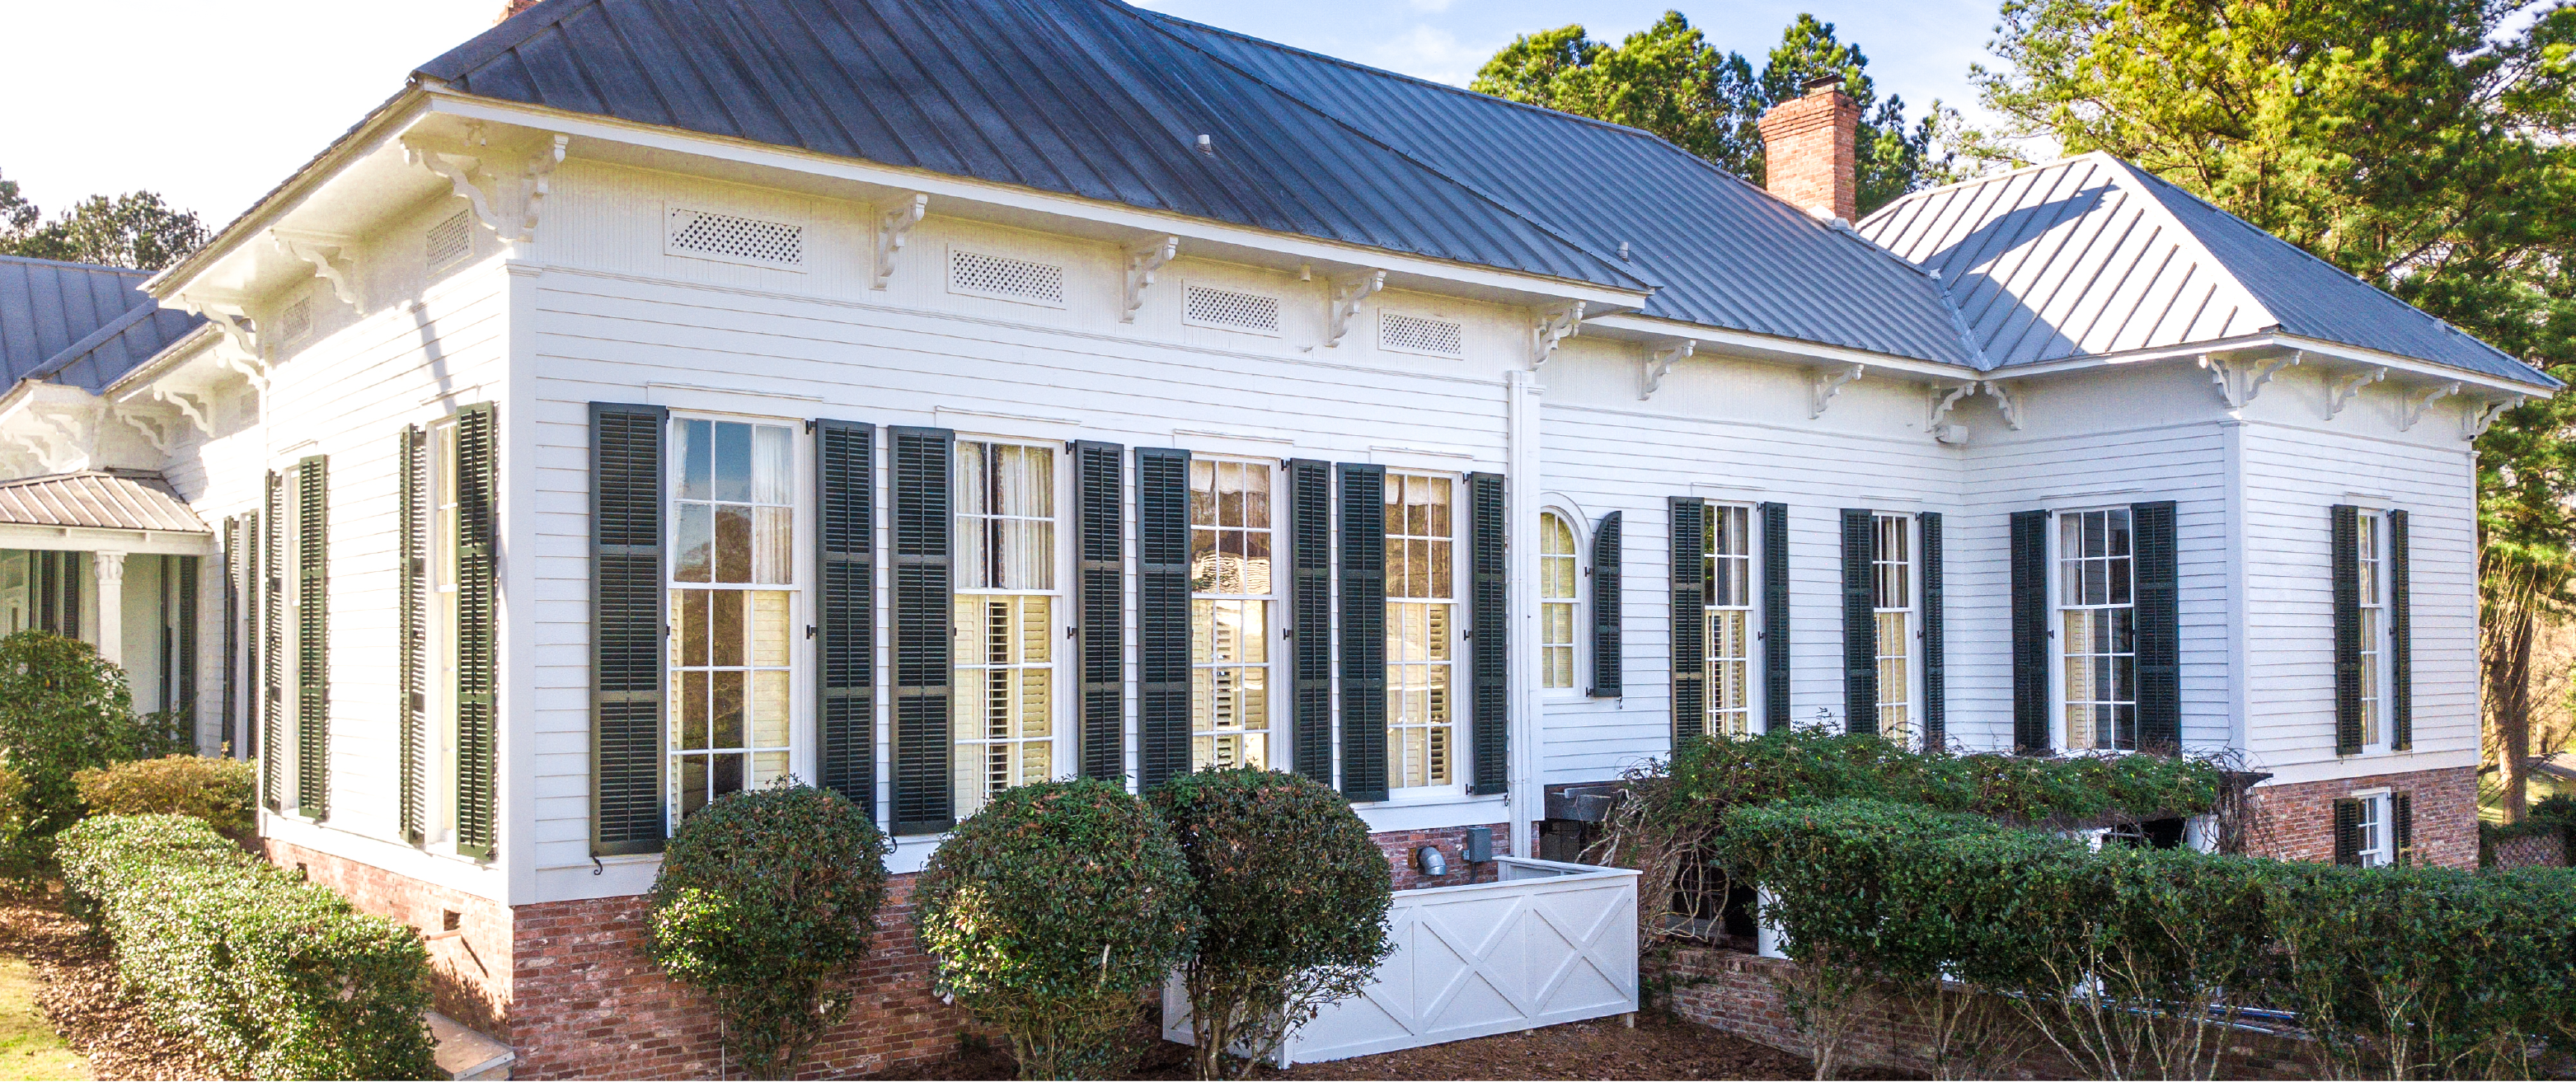 plantation shutters custom southern shutter home window treatment